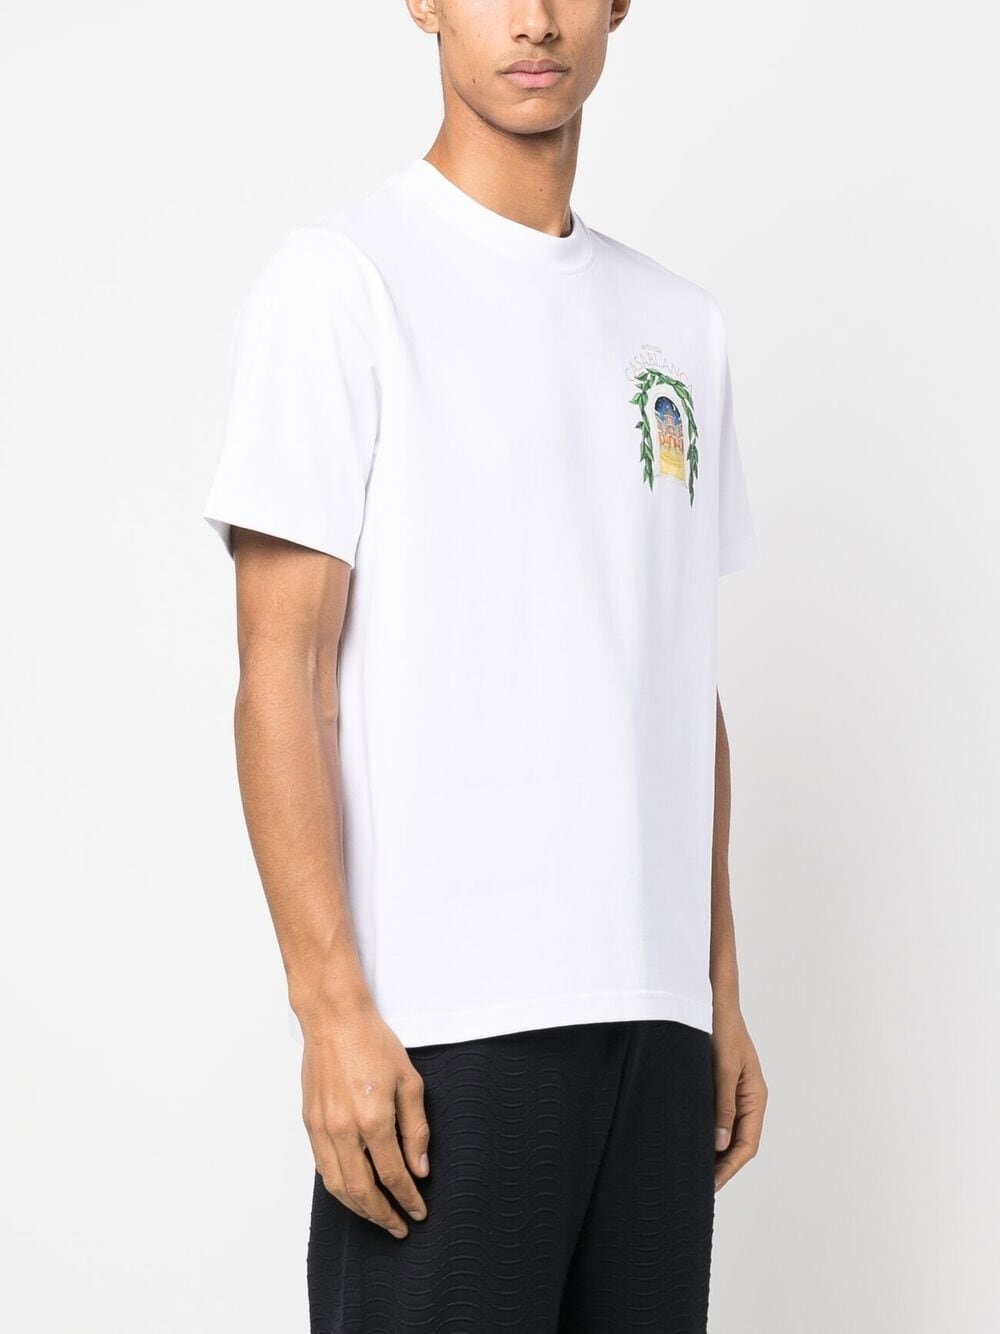 Casablanca Avenida Print T-shirt in White